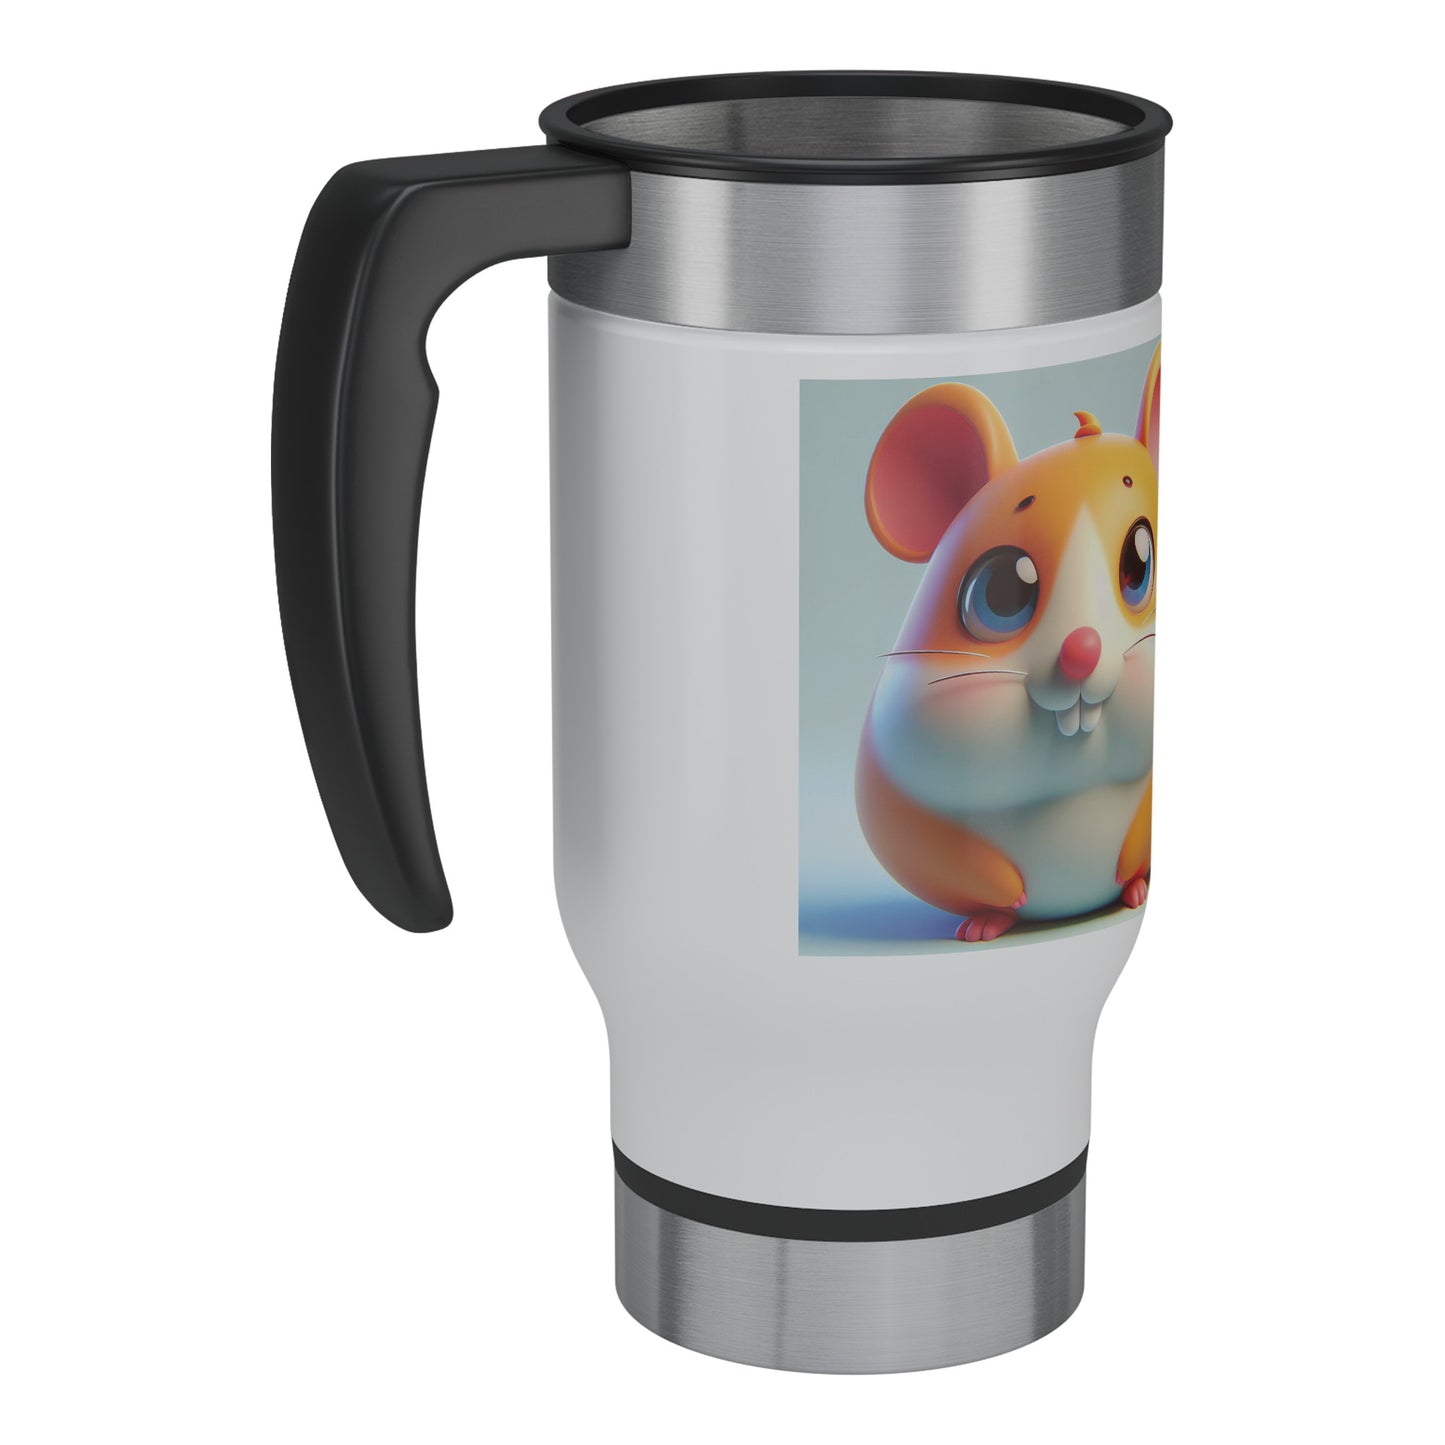 Cute & Adorable Rodents - 14oz Travel Mug - Hamster #2